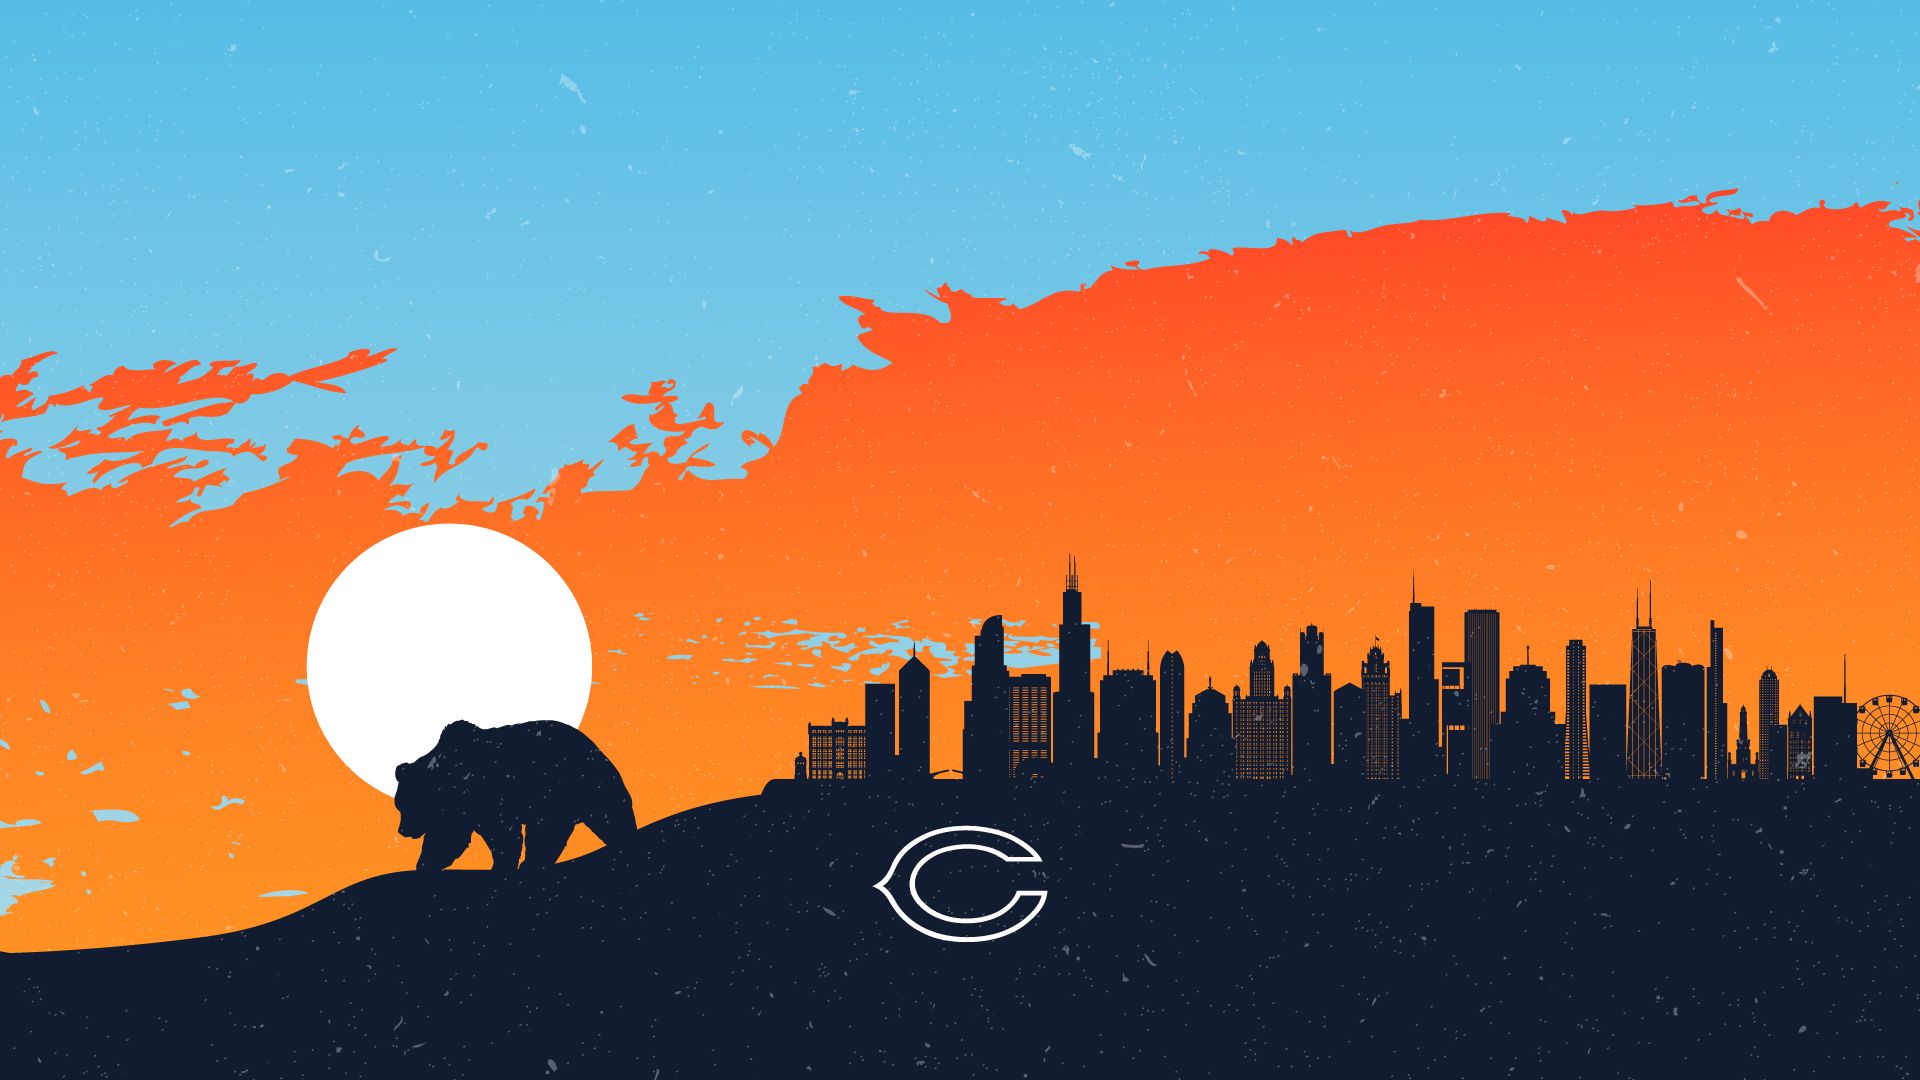 Wallpaper. Chicago Bears Official Website